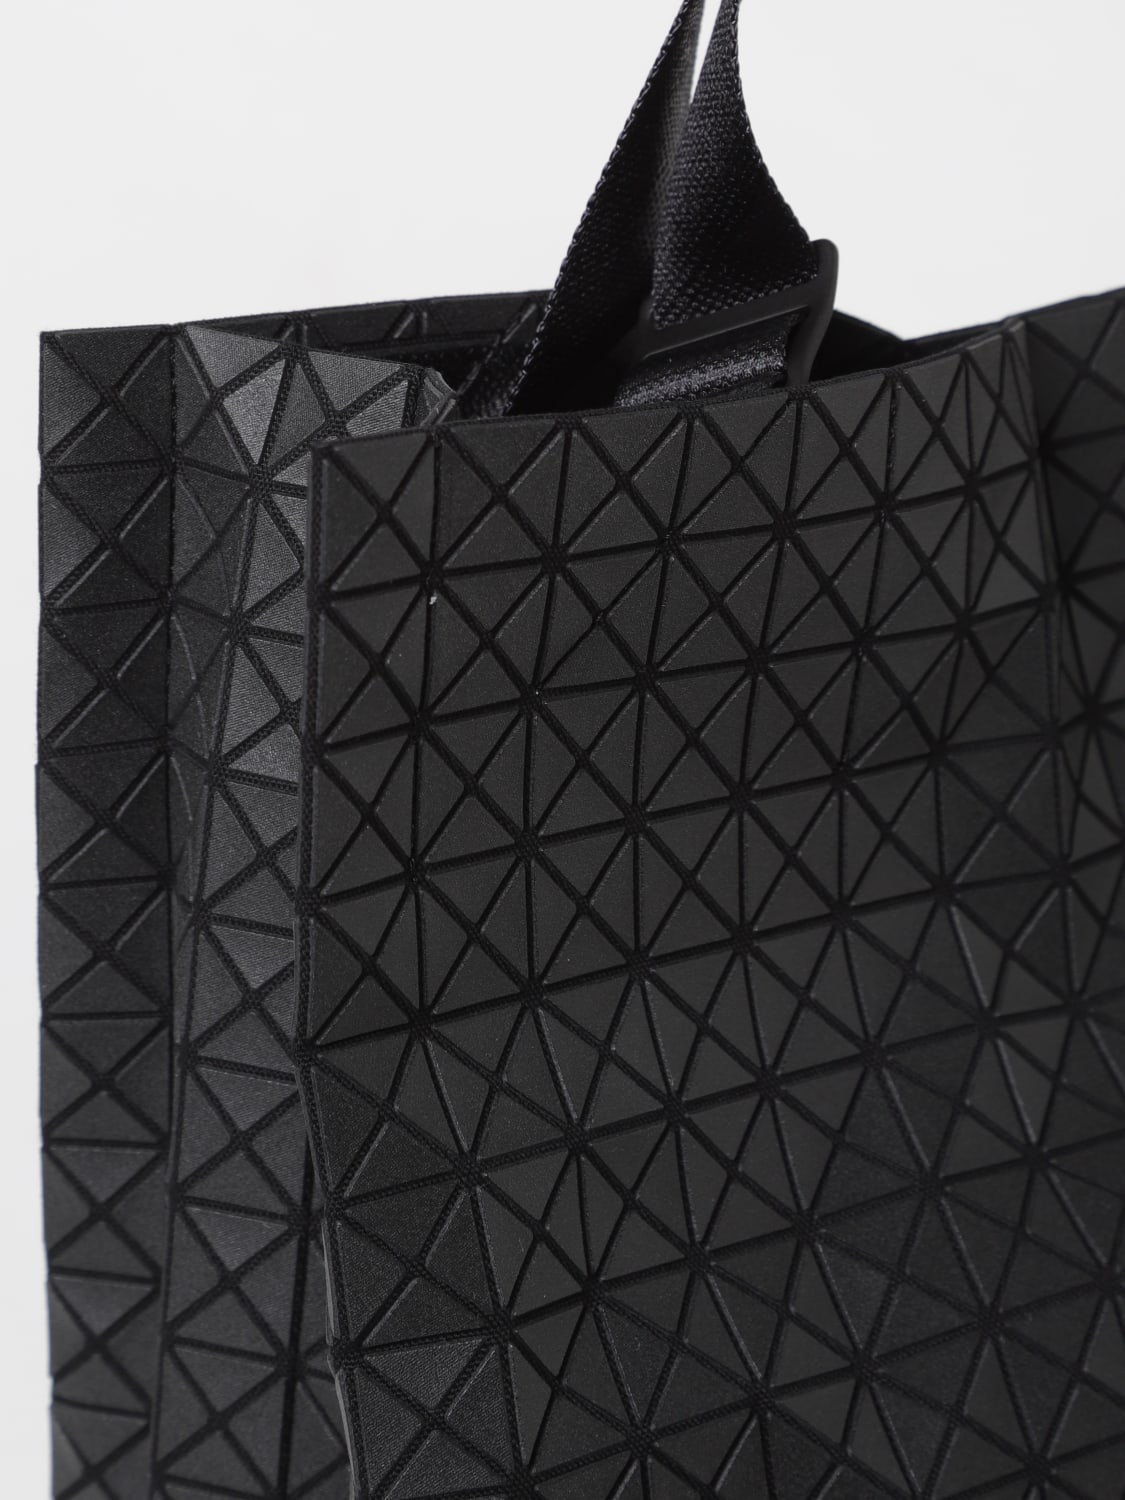 BAO BAO ISSEY MIYAKE Black & Off-White Row Metallic Messenger Bag